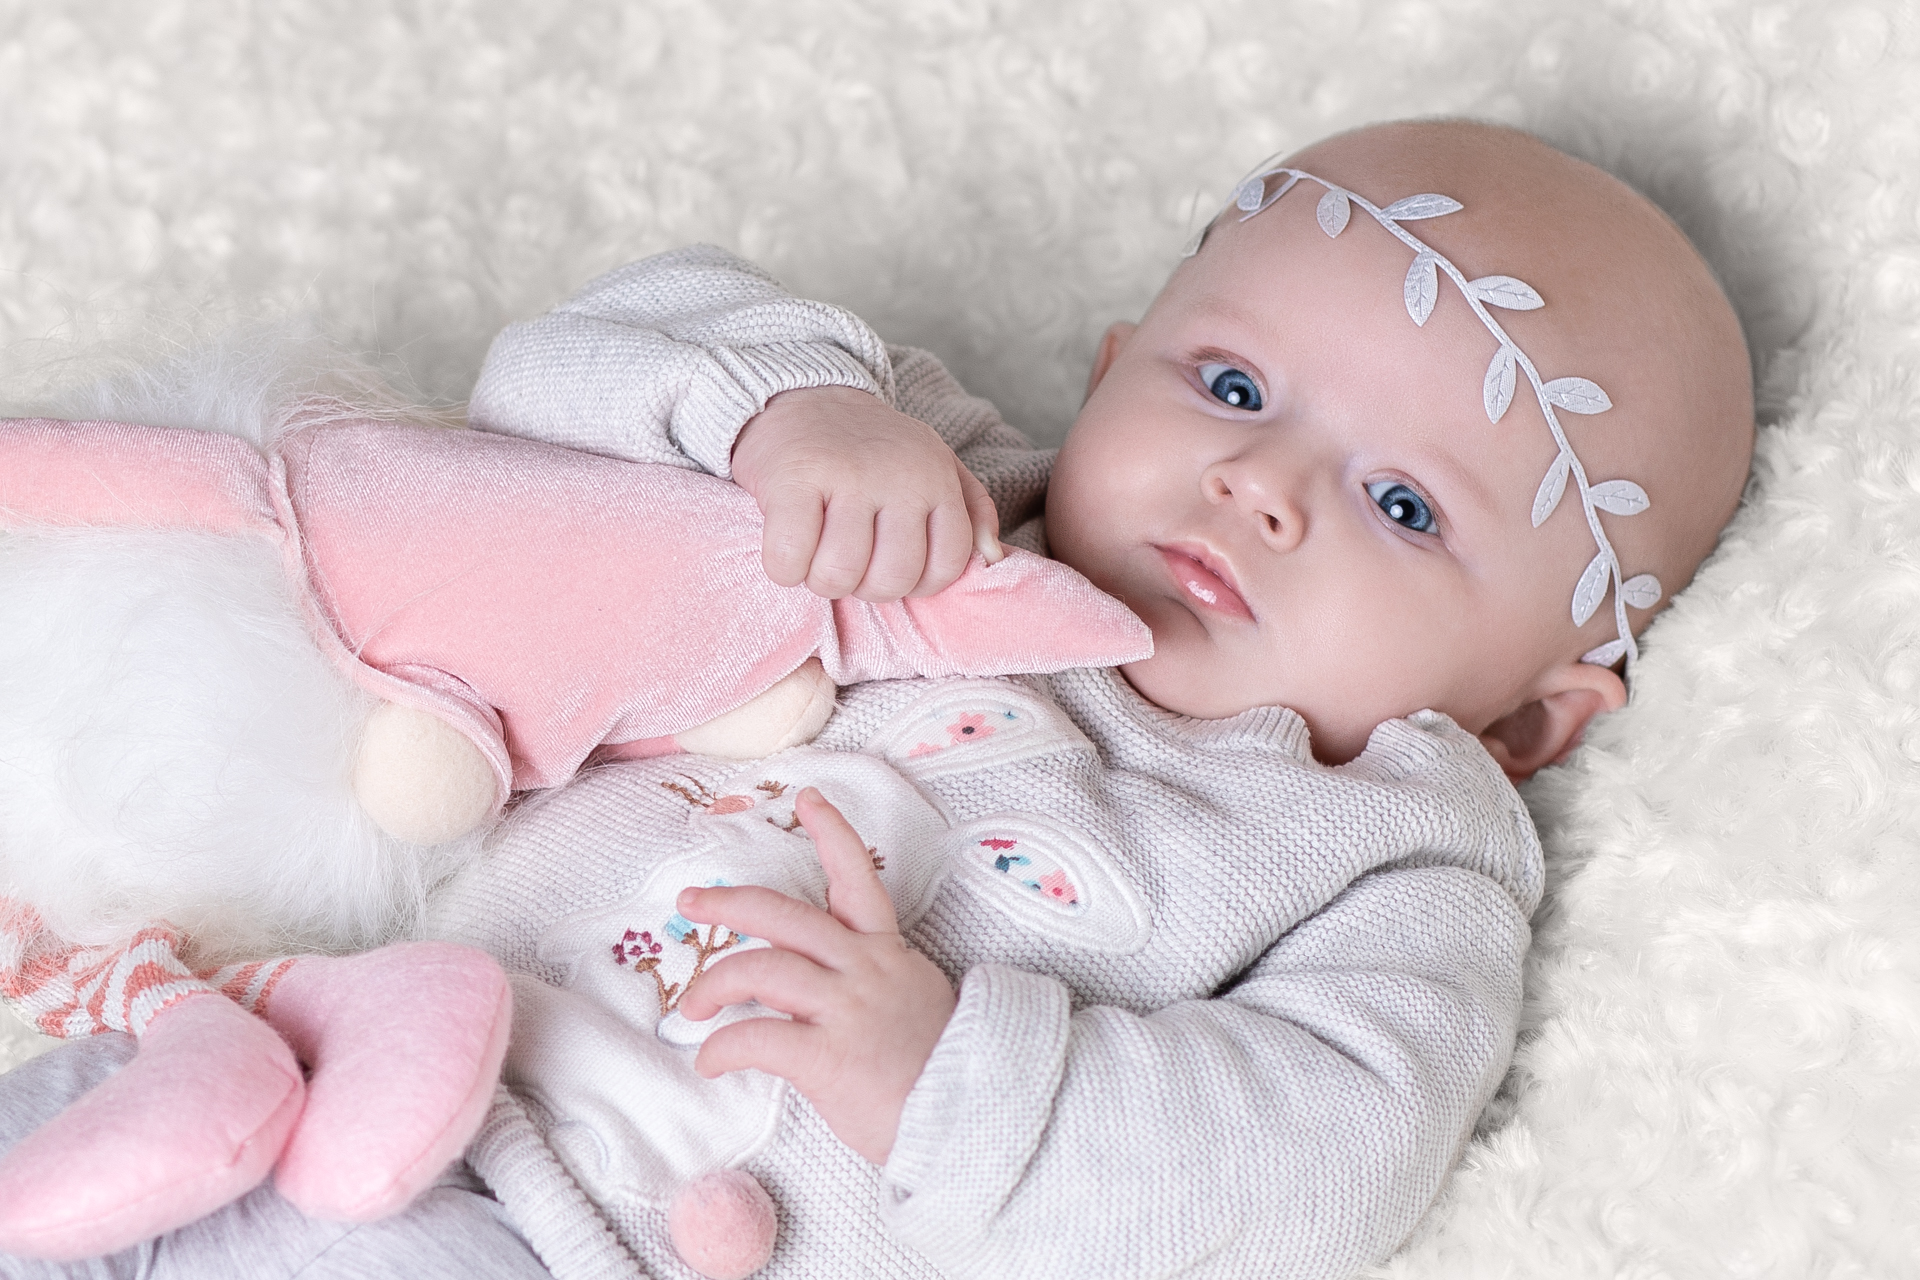 jessica joyce spangenberg | jessica joyce fotografie | fotostudio luedenscheid | babyfotografie | newbornfotograf